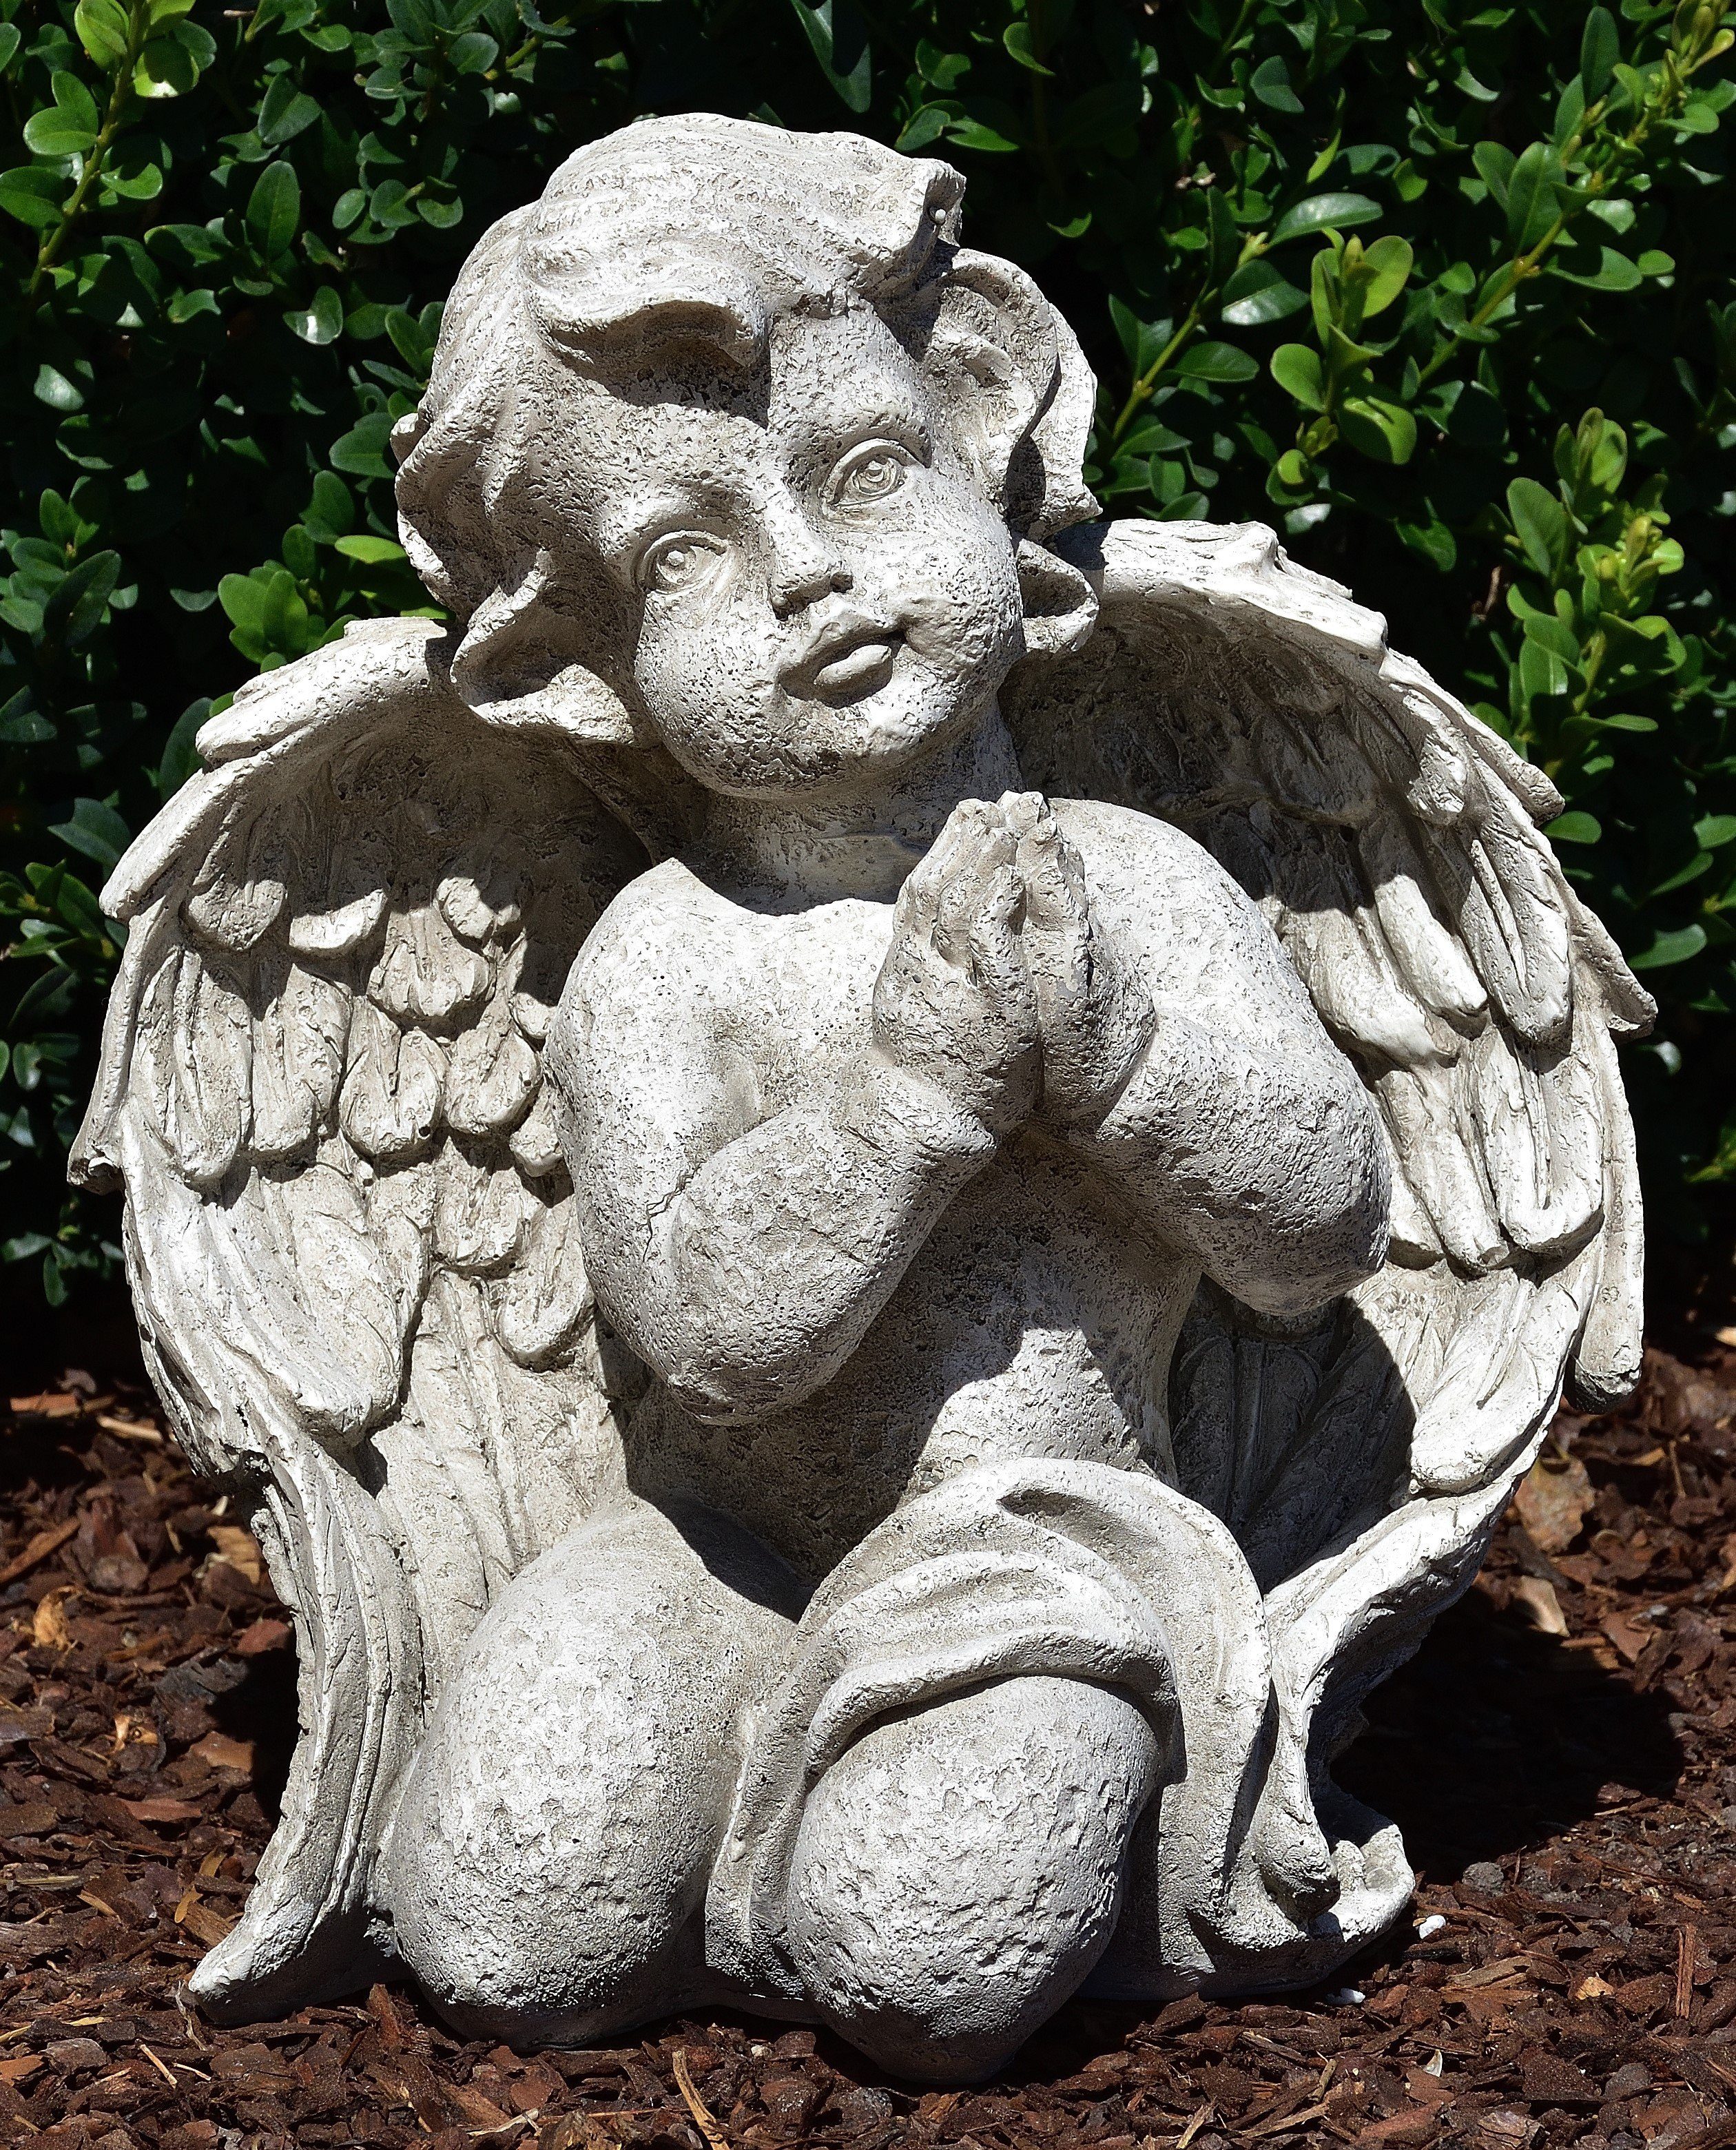 MystiCalls Engelfigur Dekofigur Engel betend - Grabengel Allerheiligen Gartenfigur Garten Dekoration